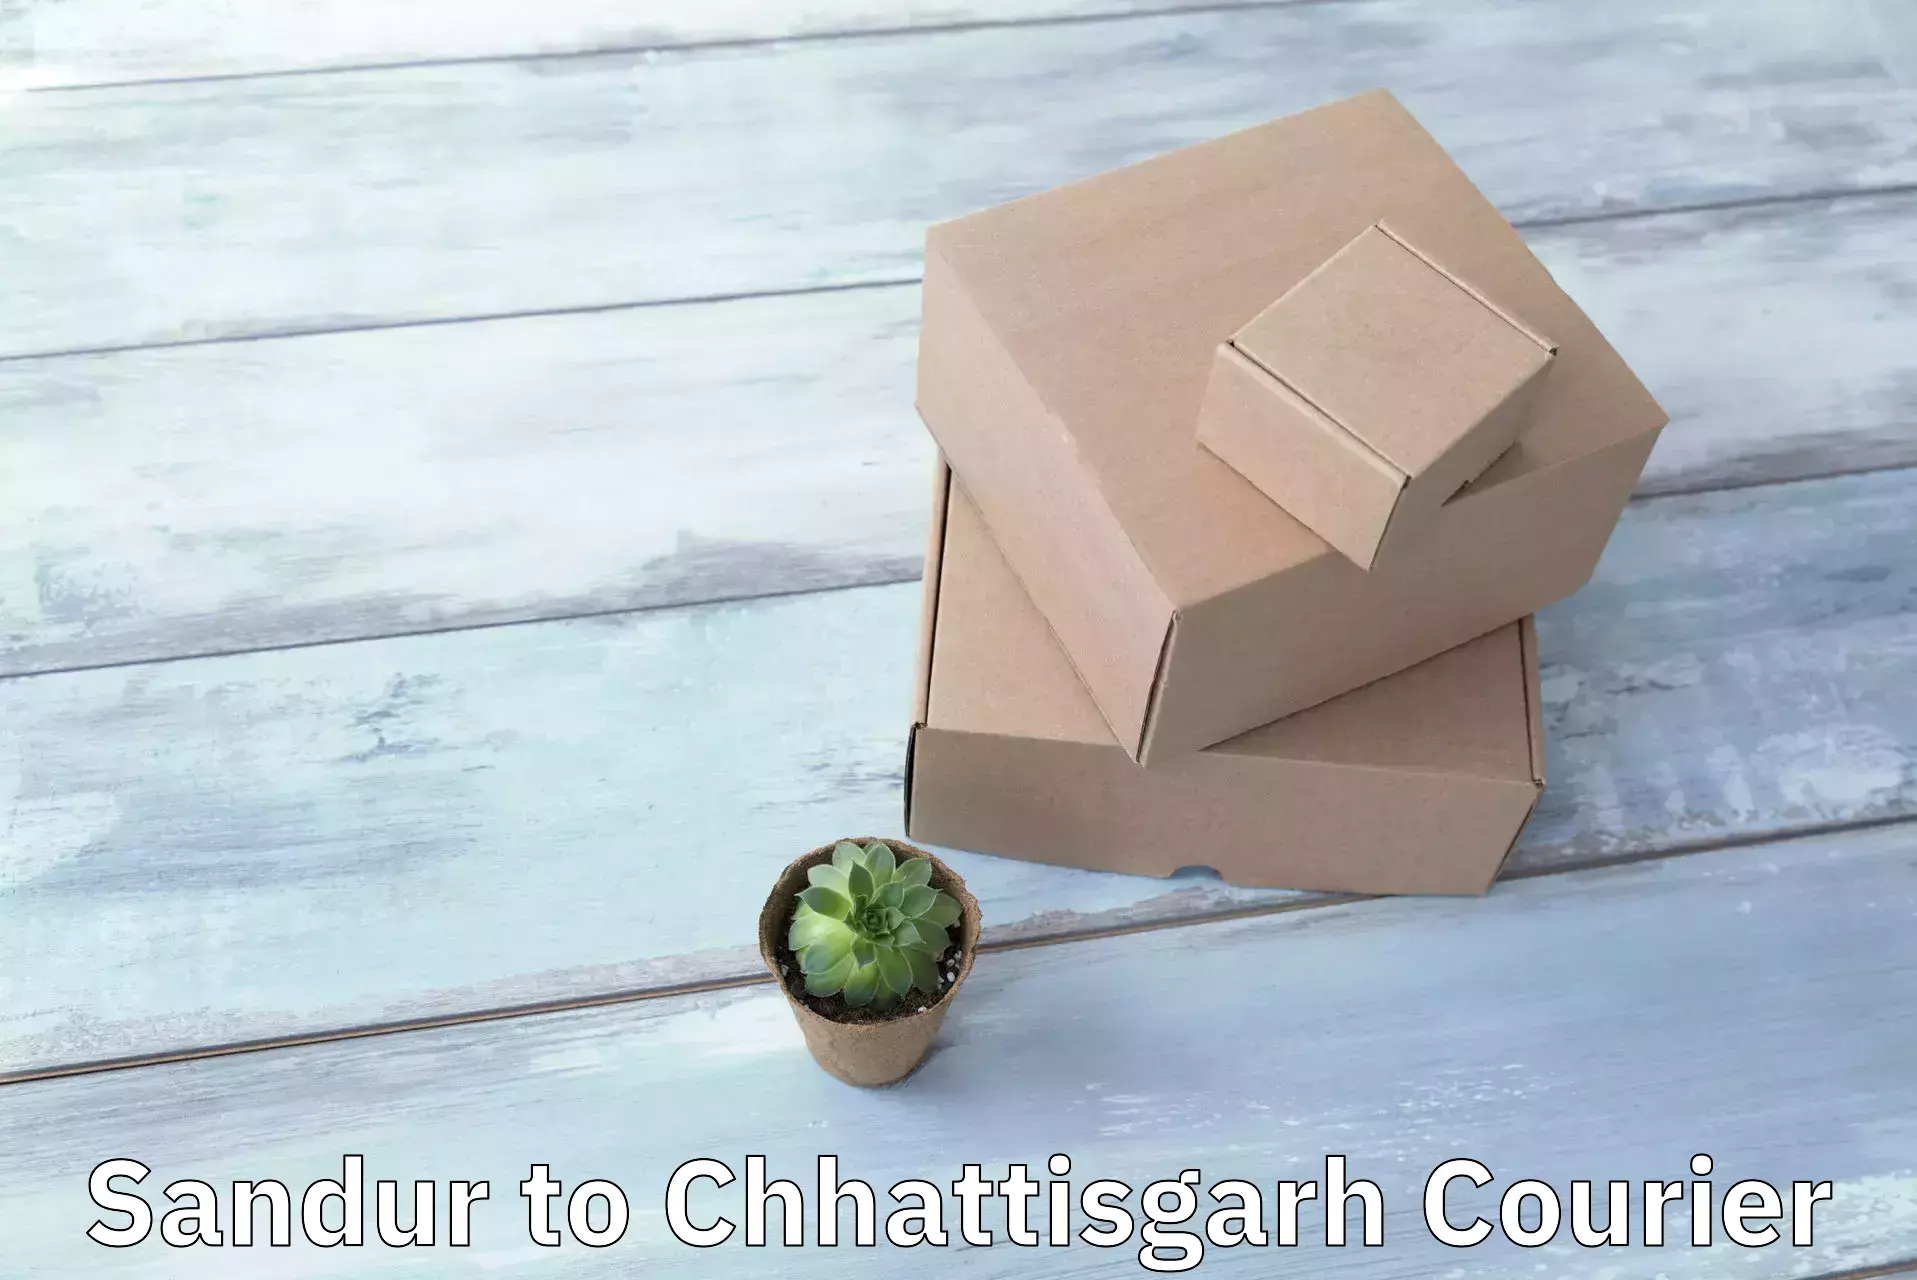 Modern delivery technologies Sandur to Patna Chhattisgarh